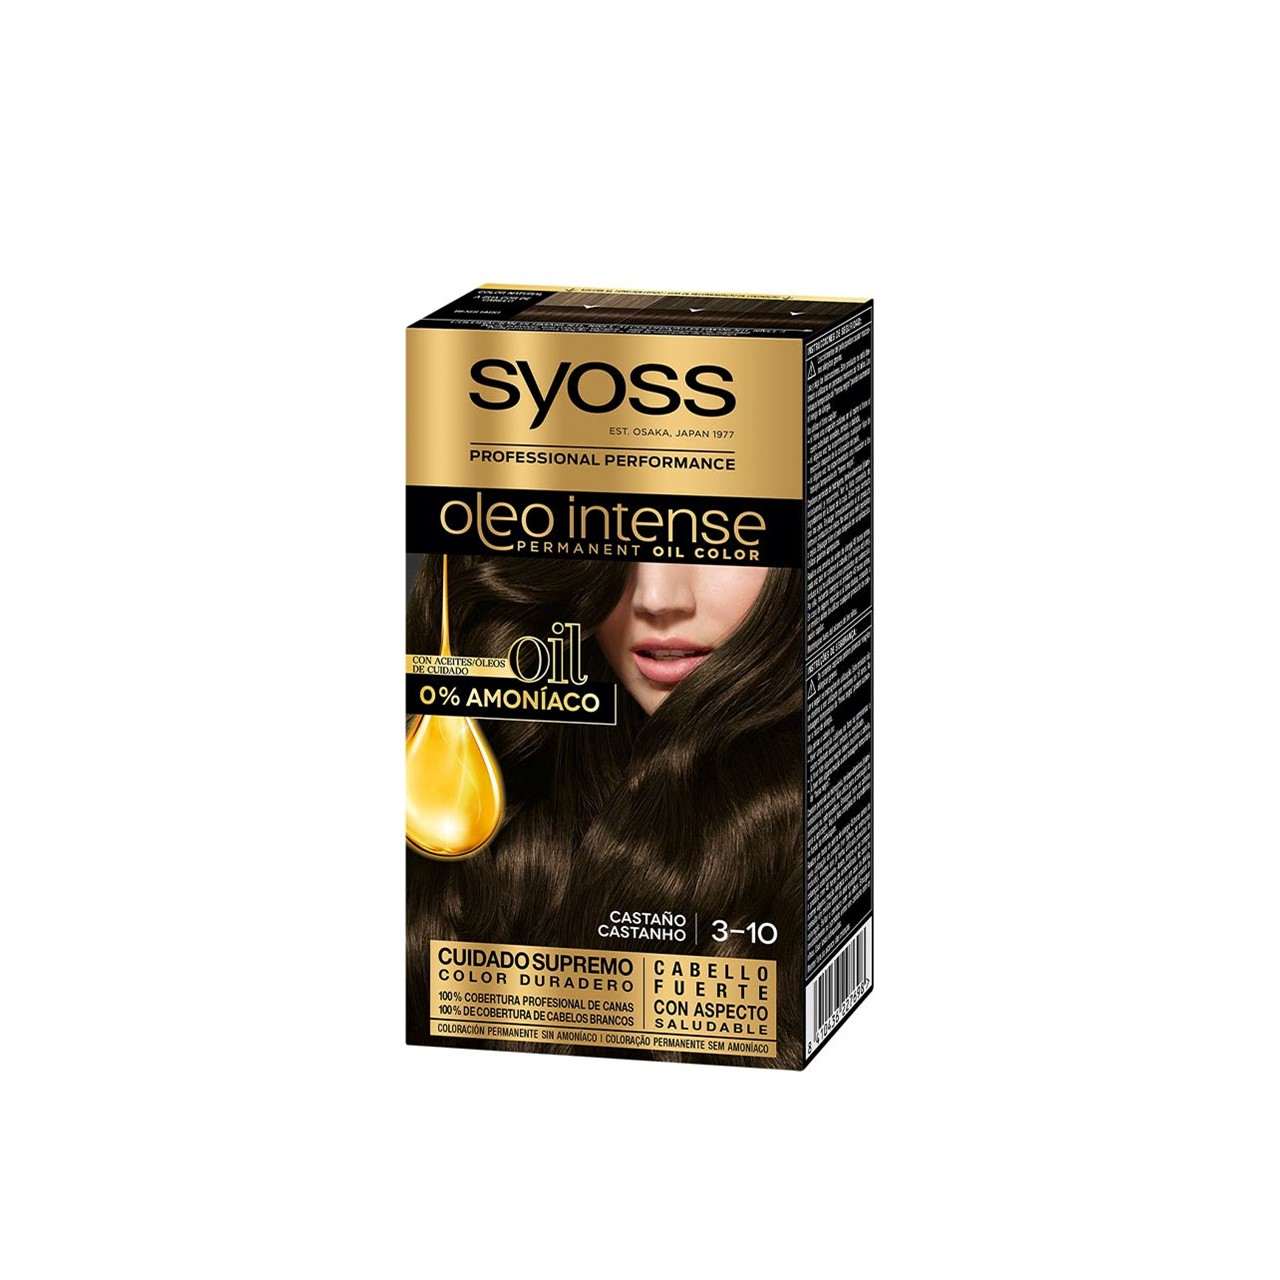 Syoss Oleo Intense Permanent Oil Color 3-10 Deep Brown Permanent Hair Dye